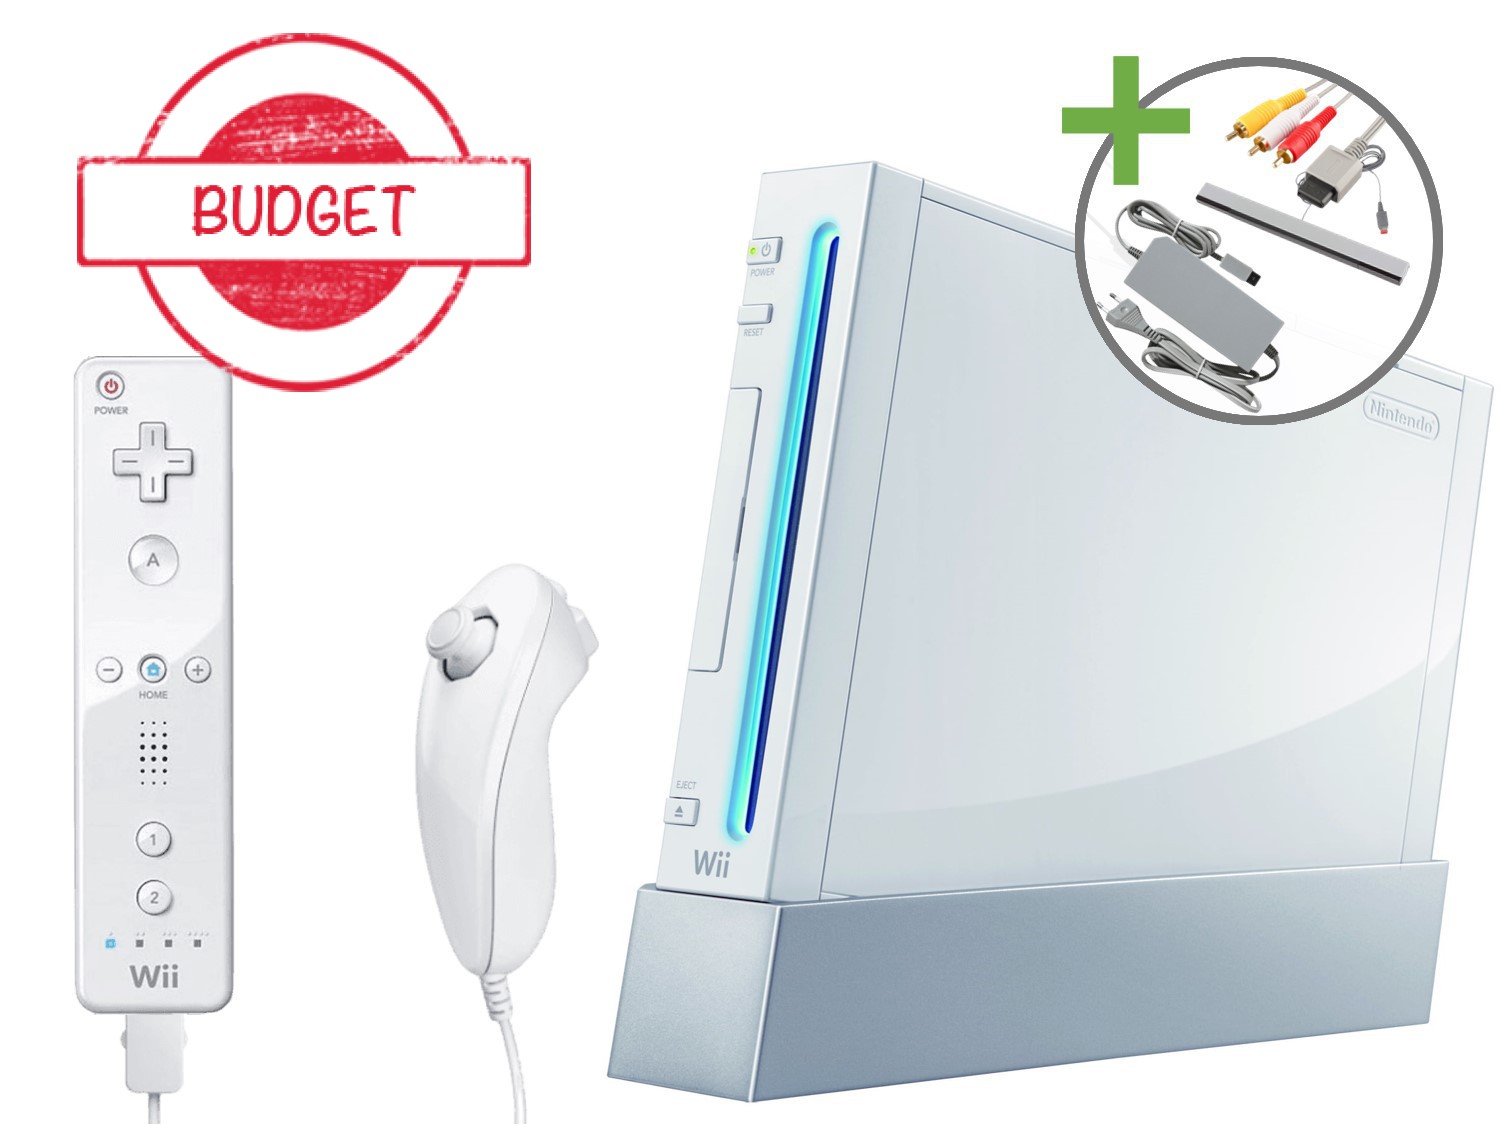 Nintendo Wii Starter Pack - Standard White Edition - Budget Kopen | Wii Hardware